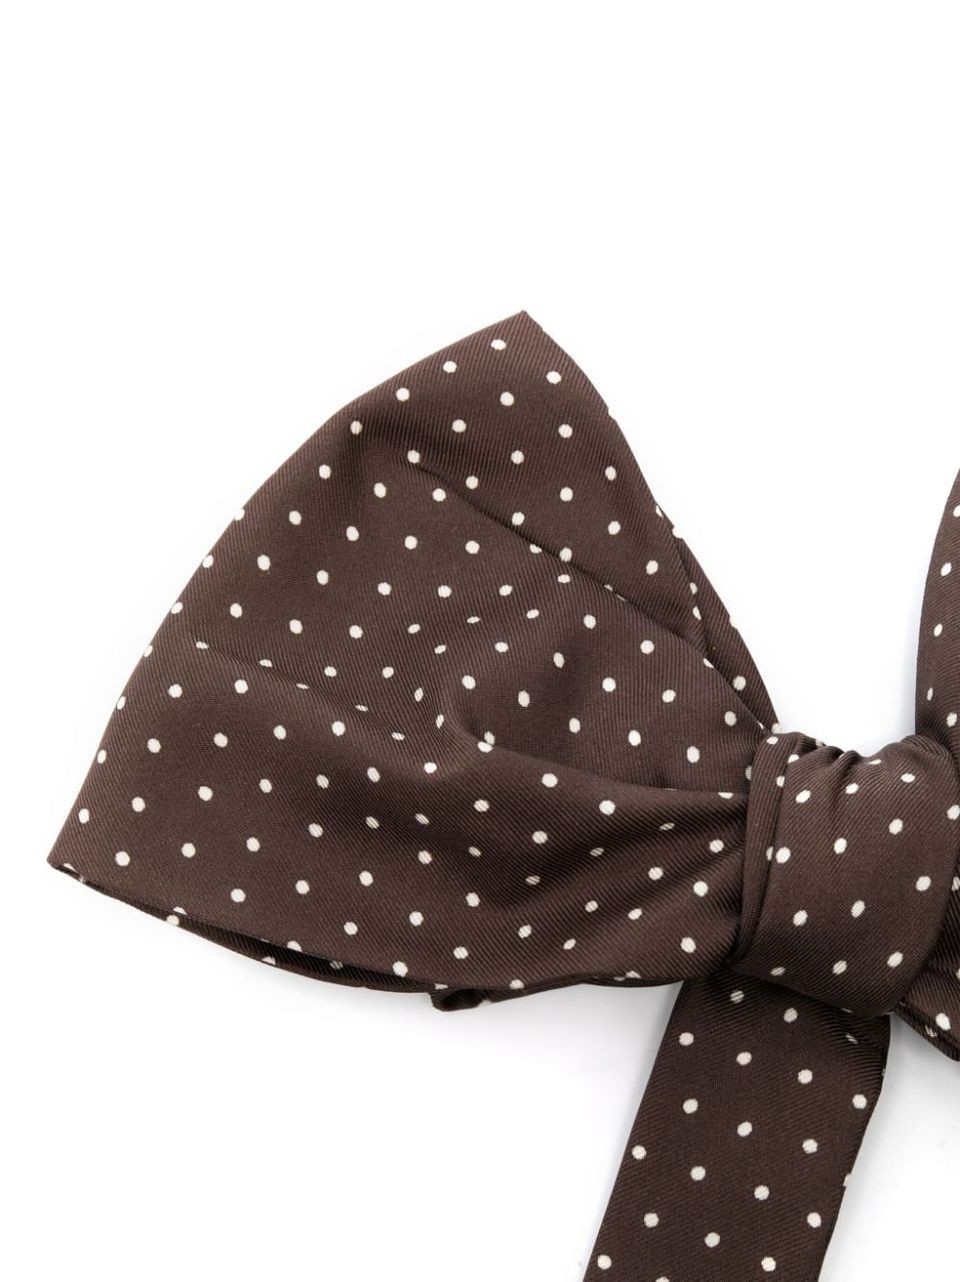 Polka- dot bow tie